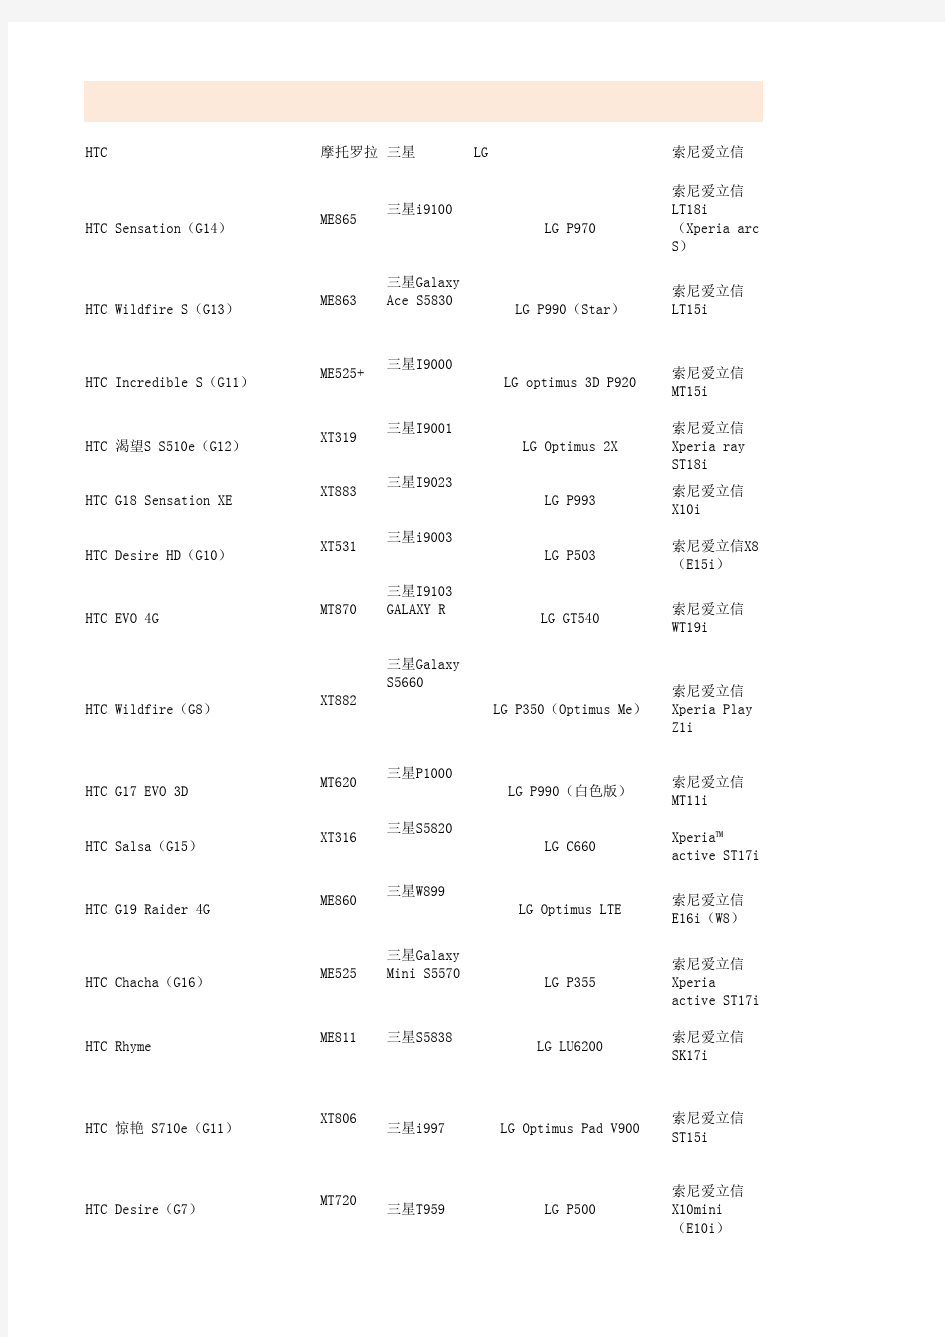 Android X全部品牌及机型列表